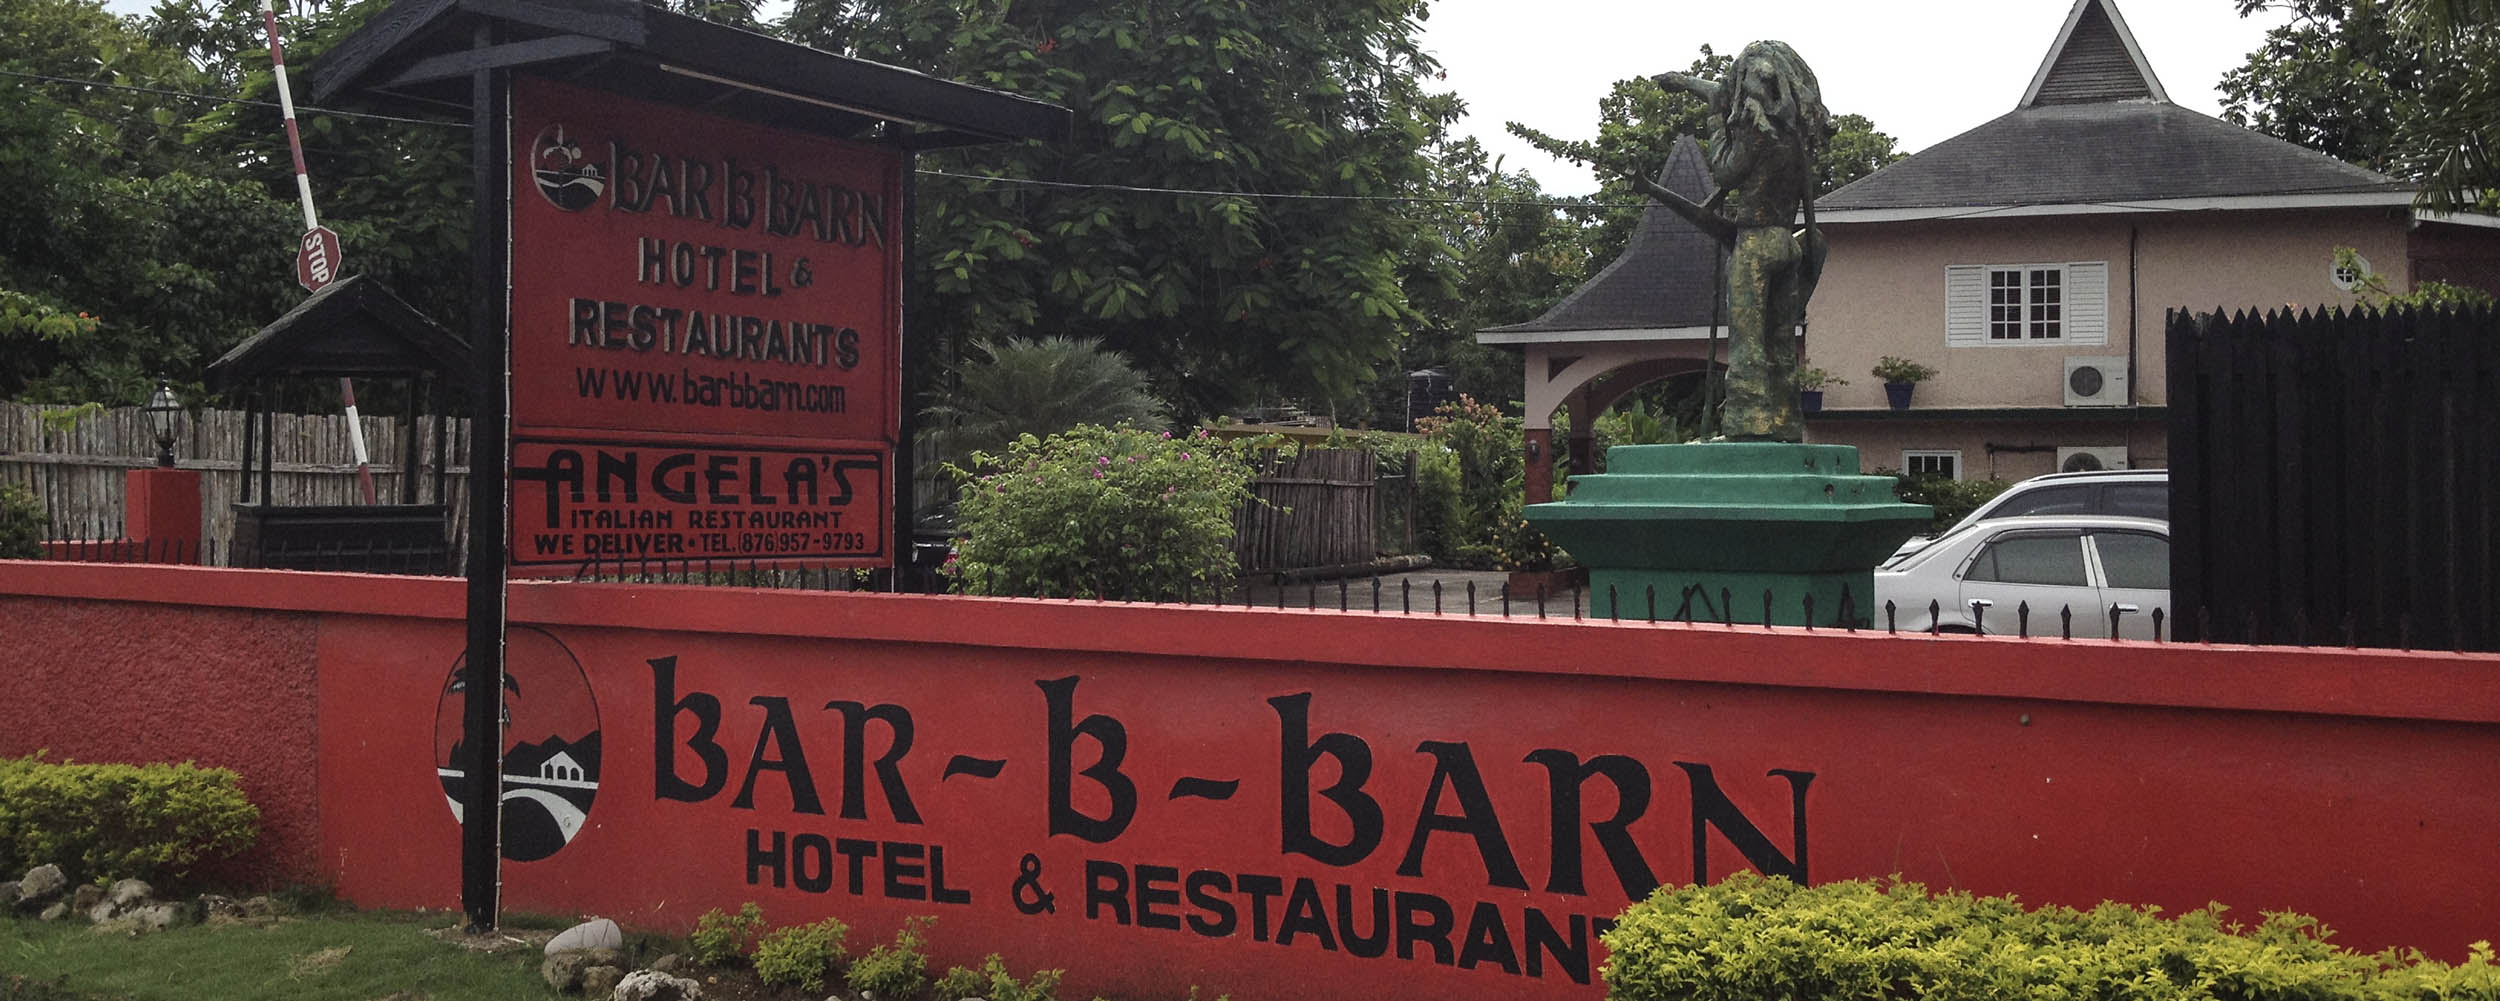 Bar-B-Barn Hotel - Negril Jamaica